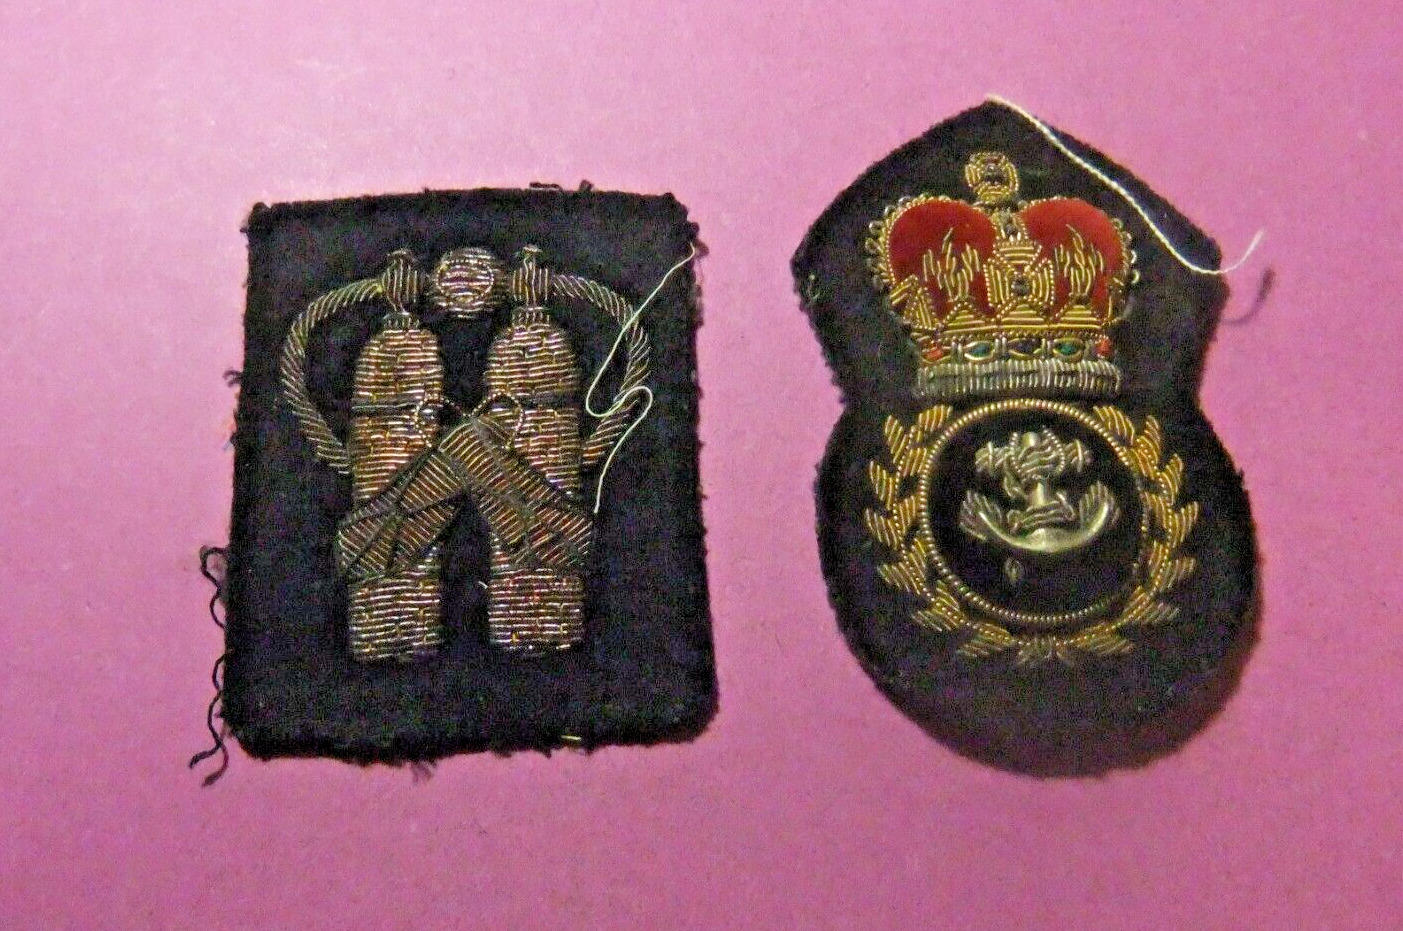 Canada Military Blazer Crest Badges, CANADA NAVY - Worn